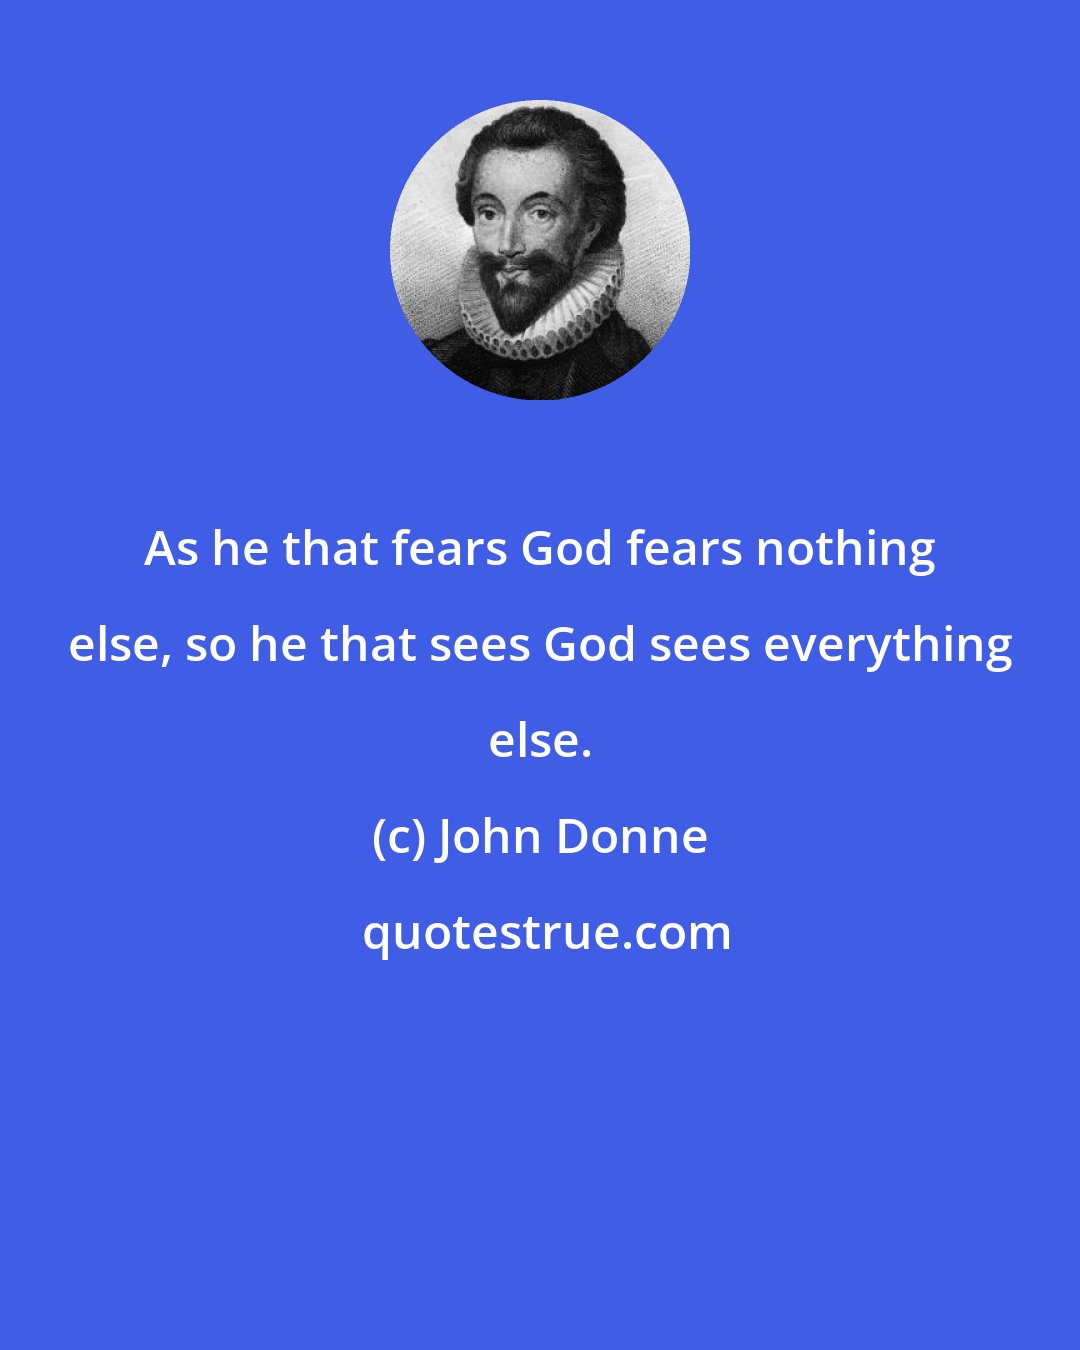 John Donne: As he that fears God fears nothing else, so he that sees God sees everything else.